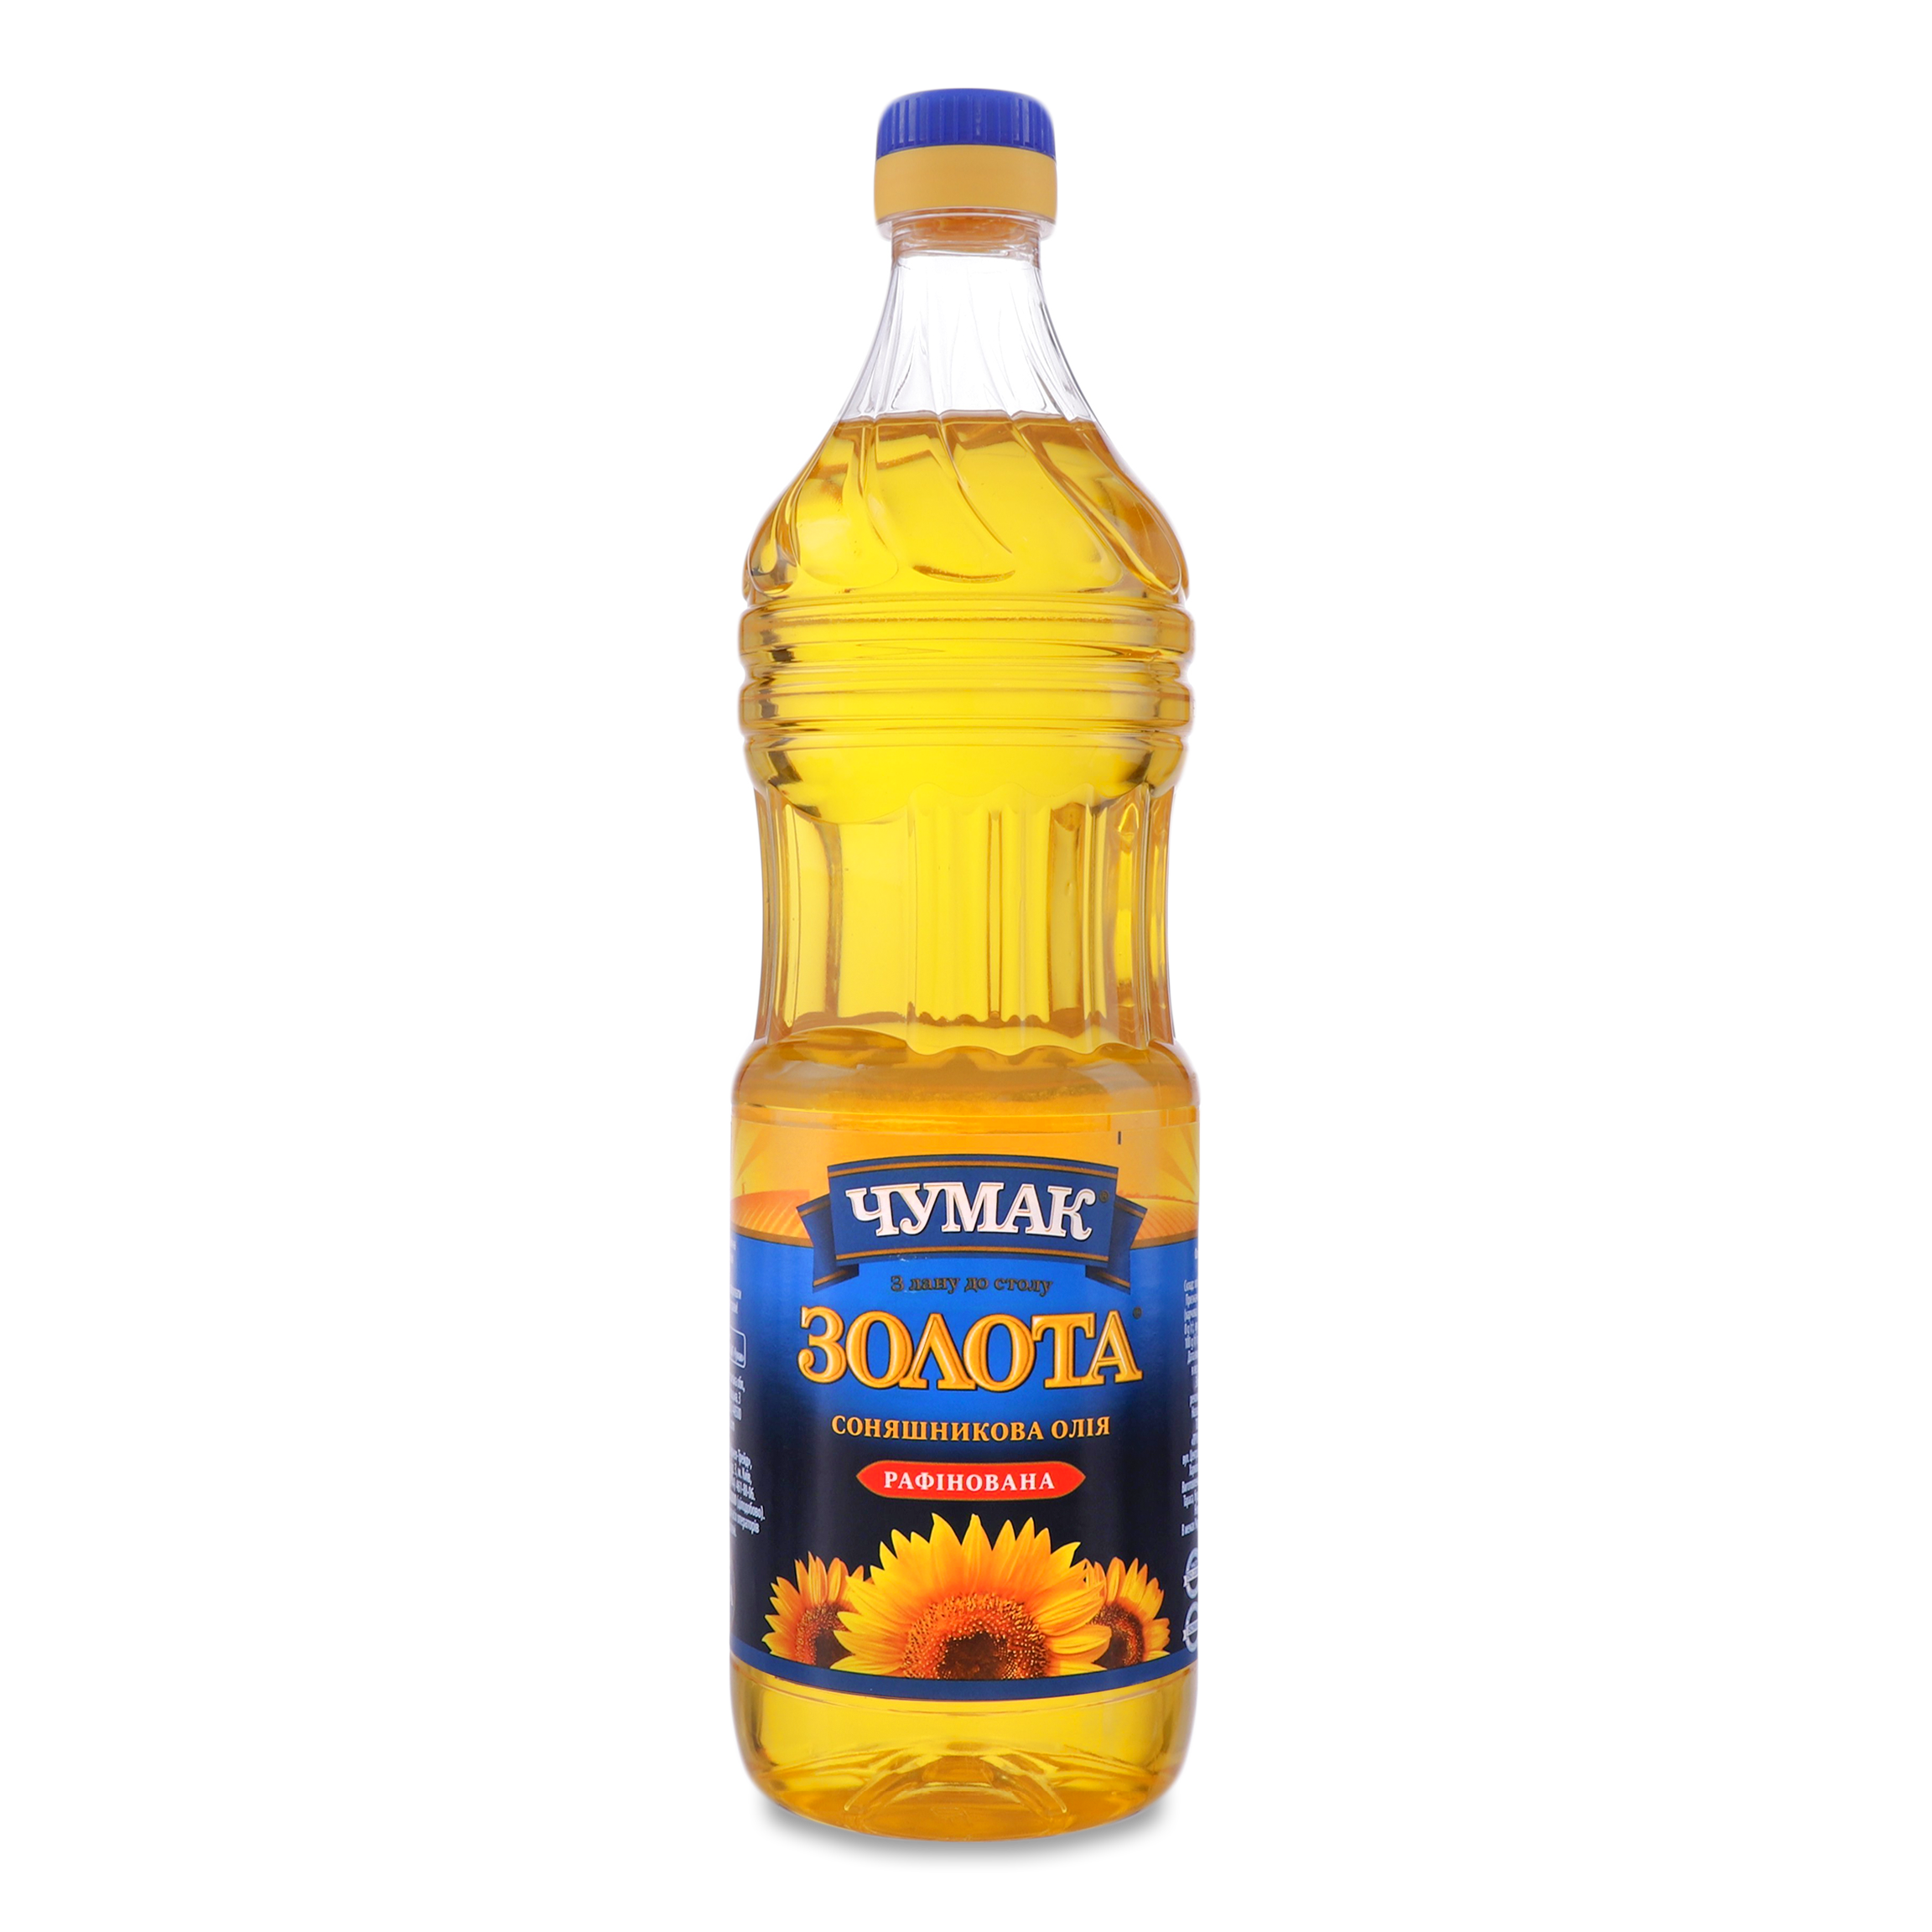 Chumak Sunflower Refined Oil 900ml